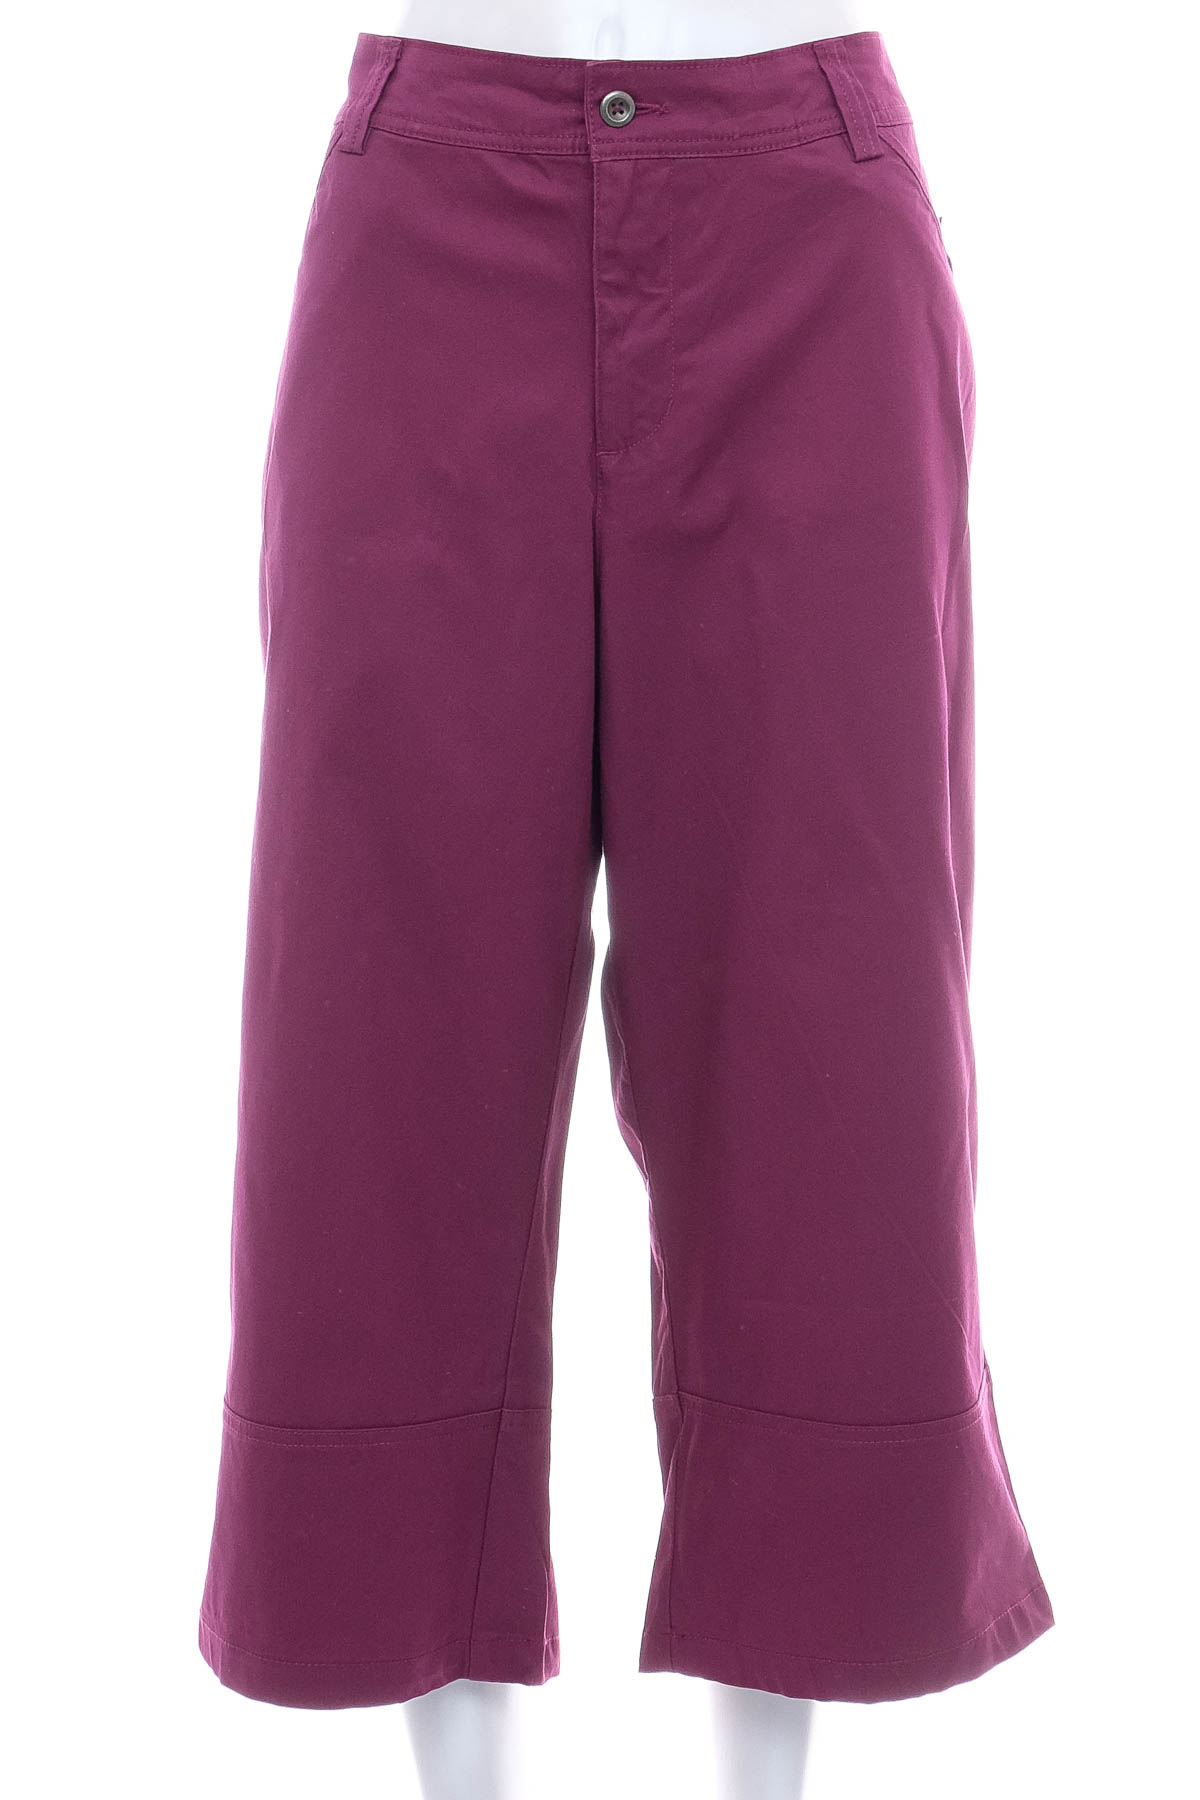 Female shorts - Venezia - 0